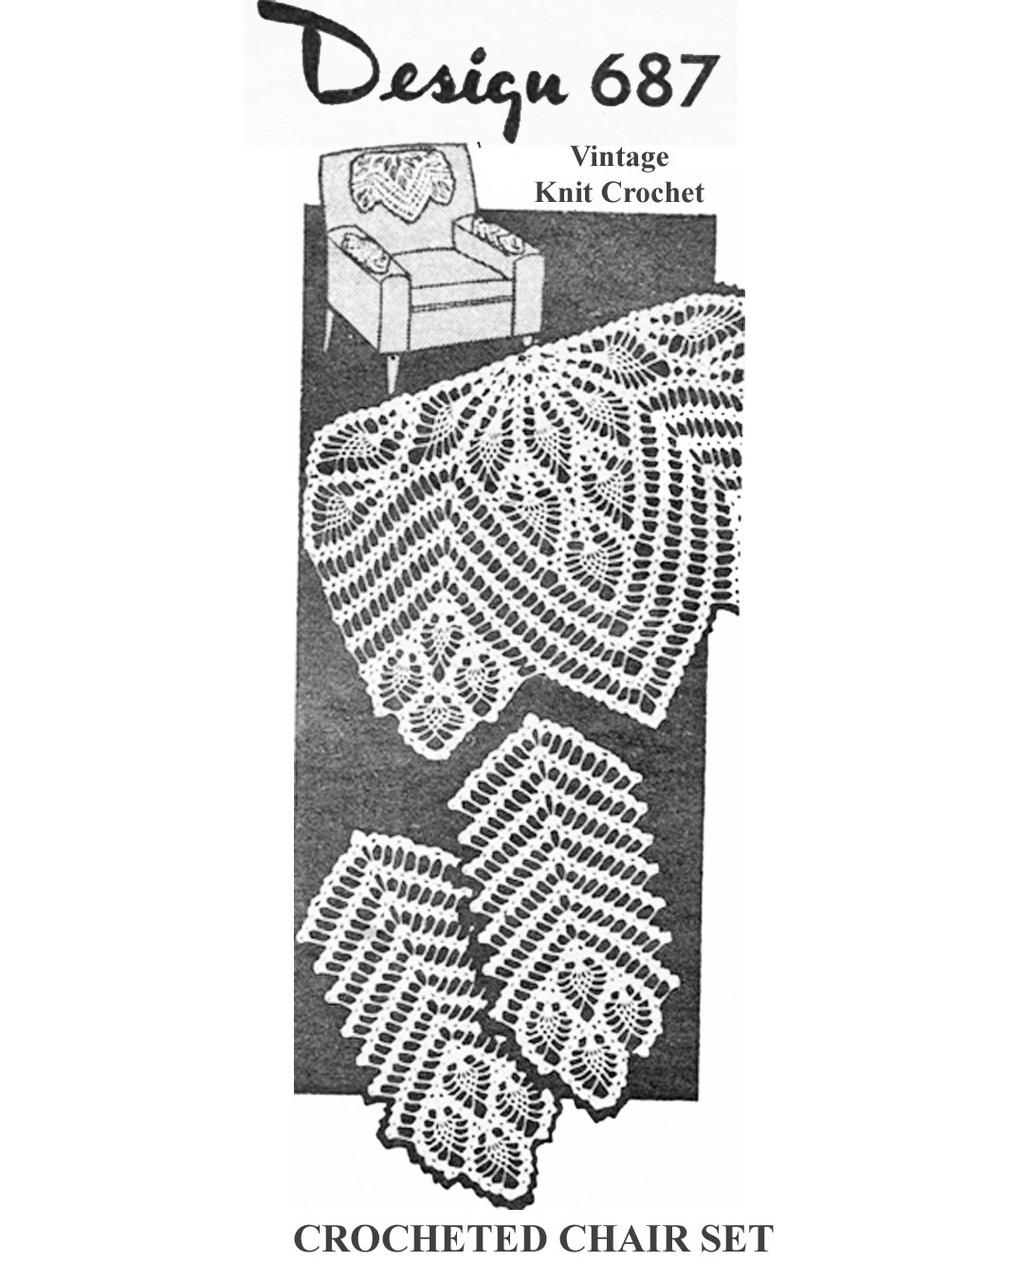 Vintage Pineapple Crochet Chair Set Pattern Mail Order Design 687